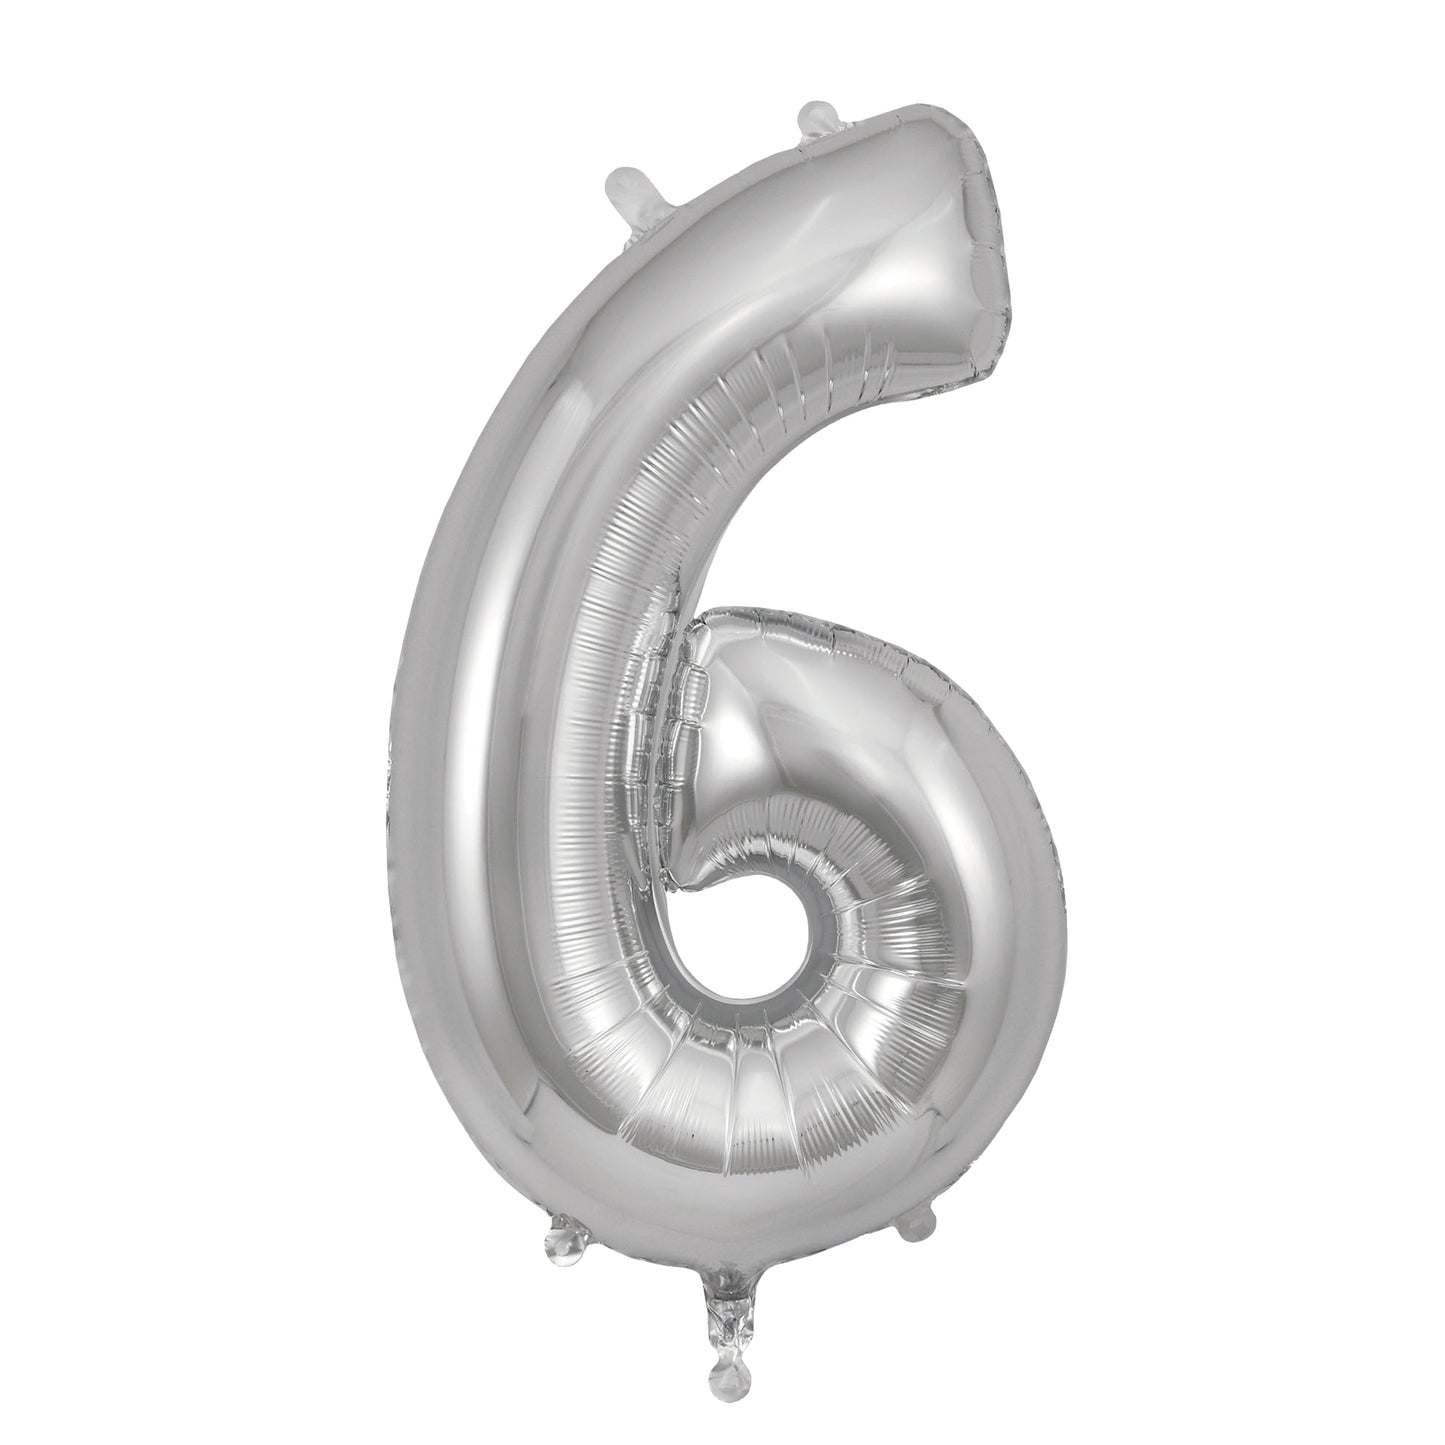 NUMERO ARGENTATO "6" – Foil Balloon